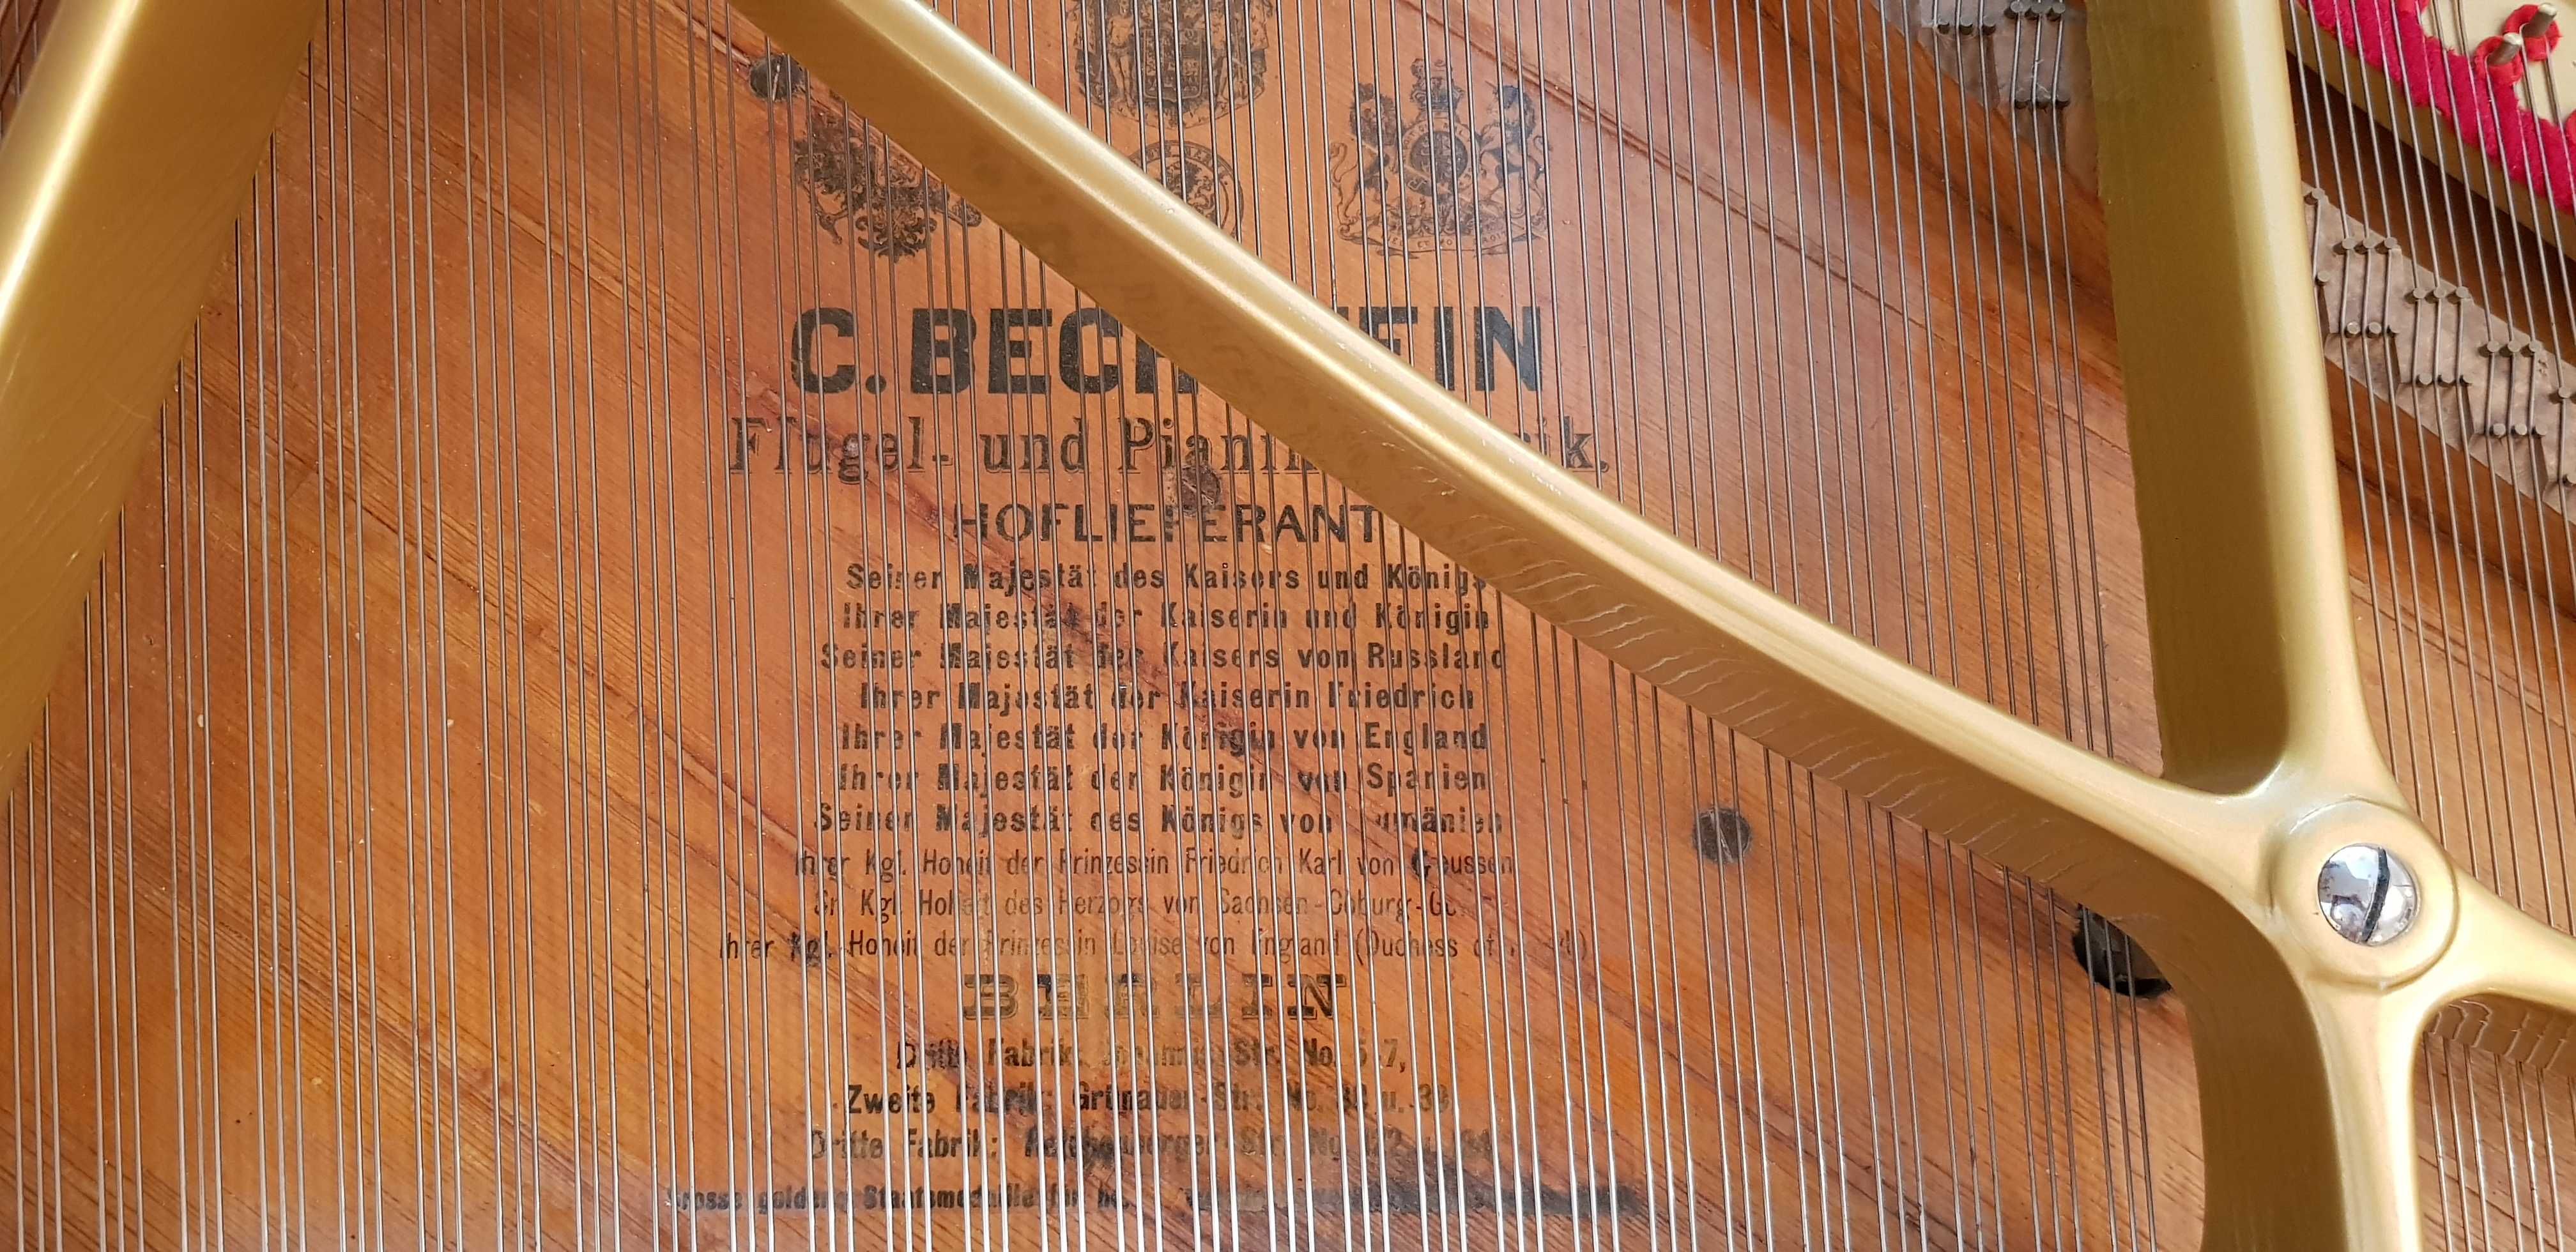 продам Бехштайн C.Bechstein белый рояль  2,20м проф реставрация